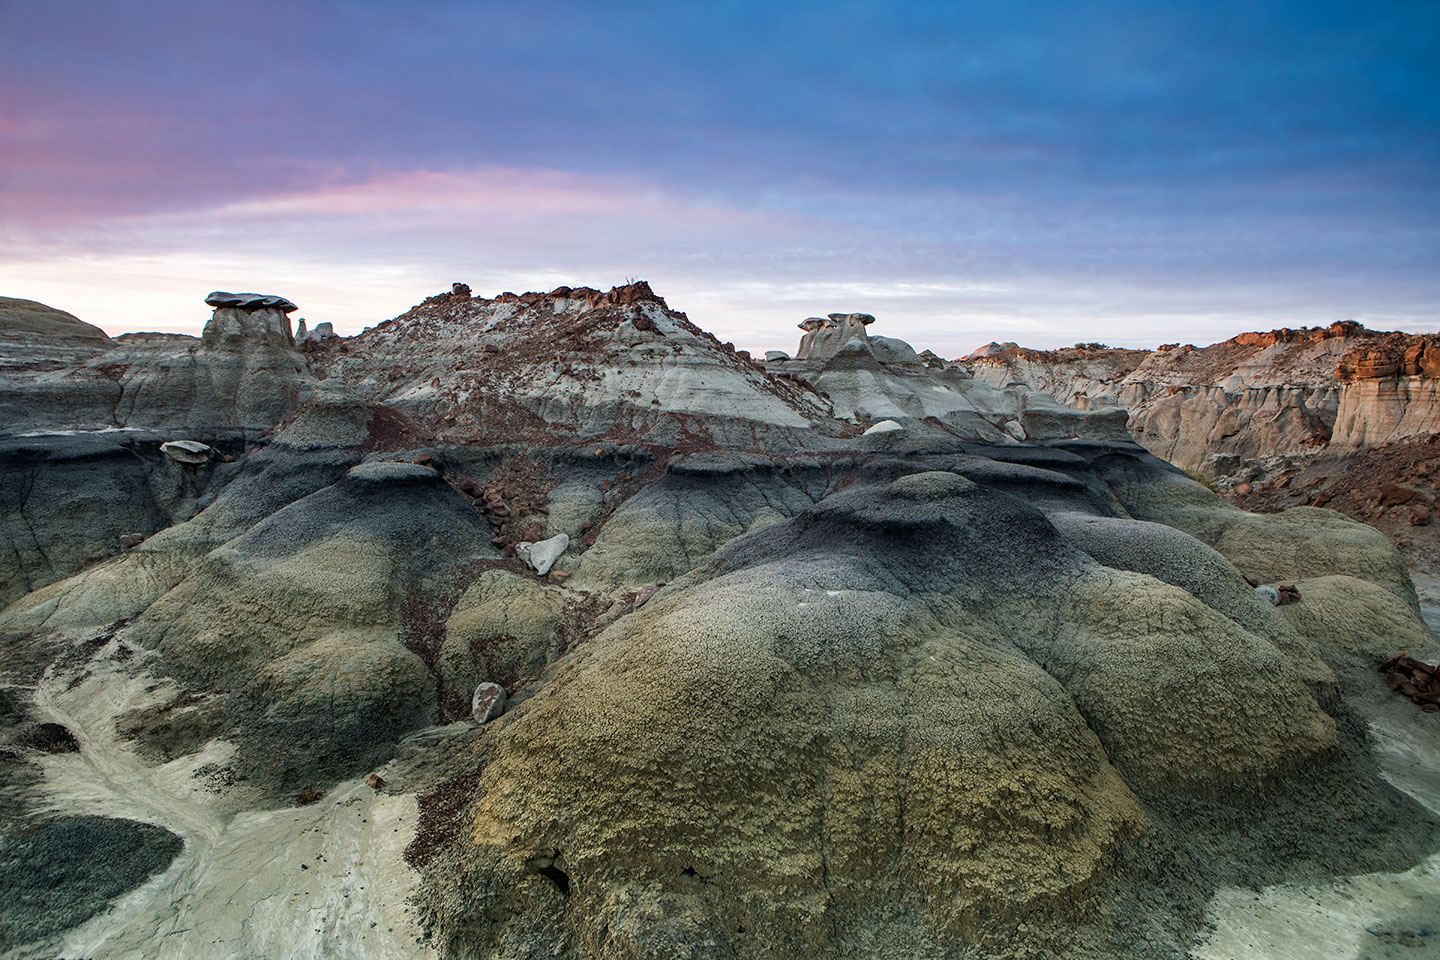 Unique rock formations of Bisti Badlands, New Mexico